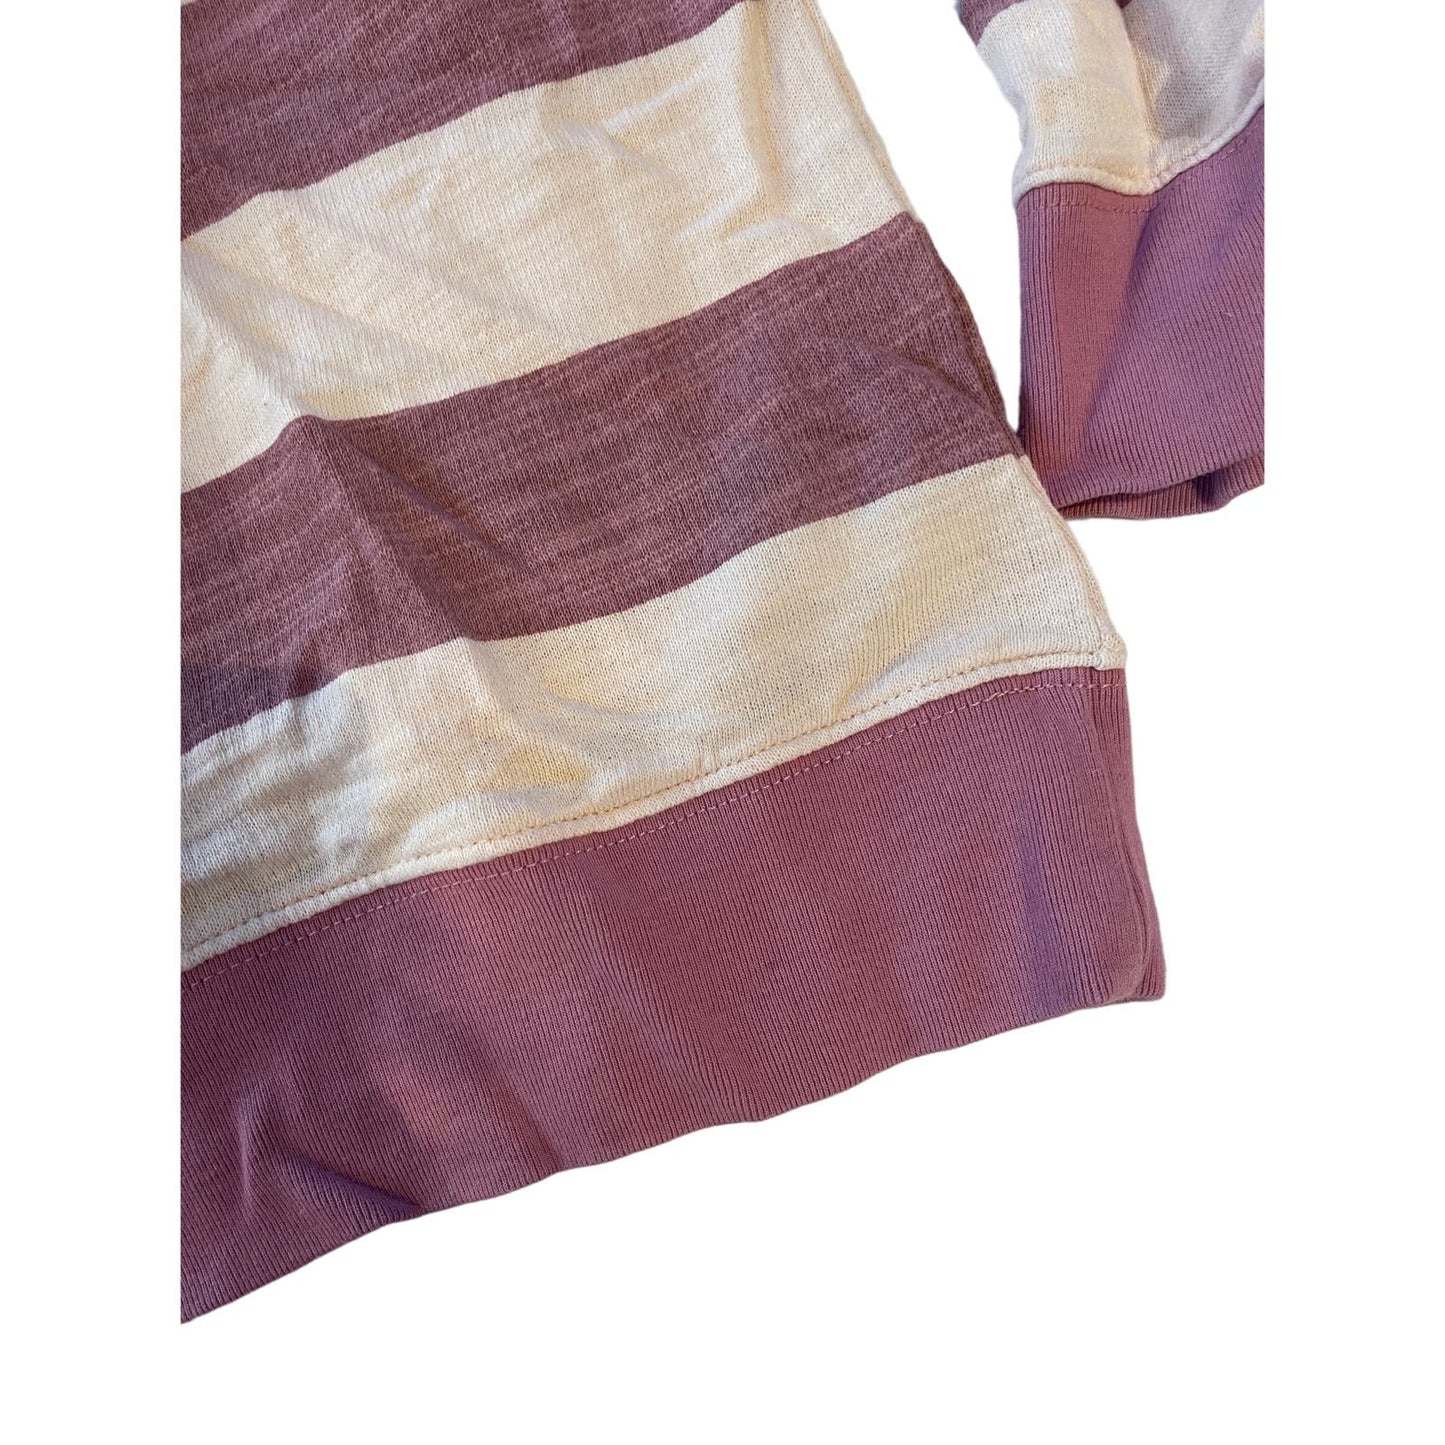 J.Crew Women's Large Vintage Fleece Crewneck Sweatshirt Pink & White Striped